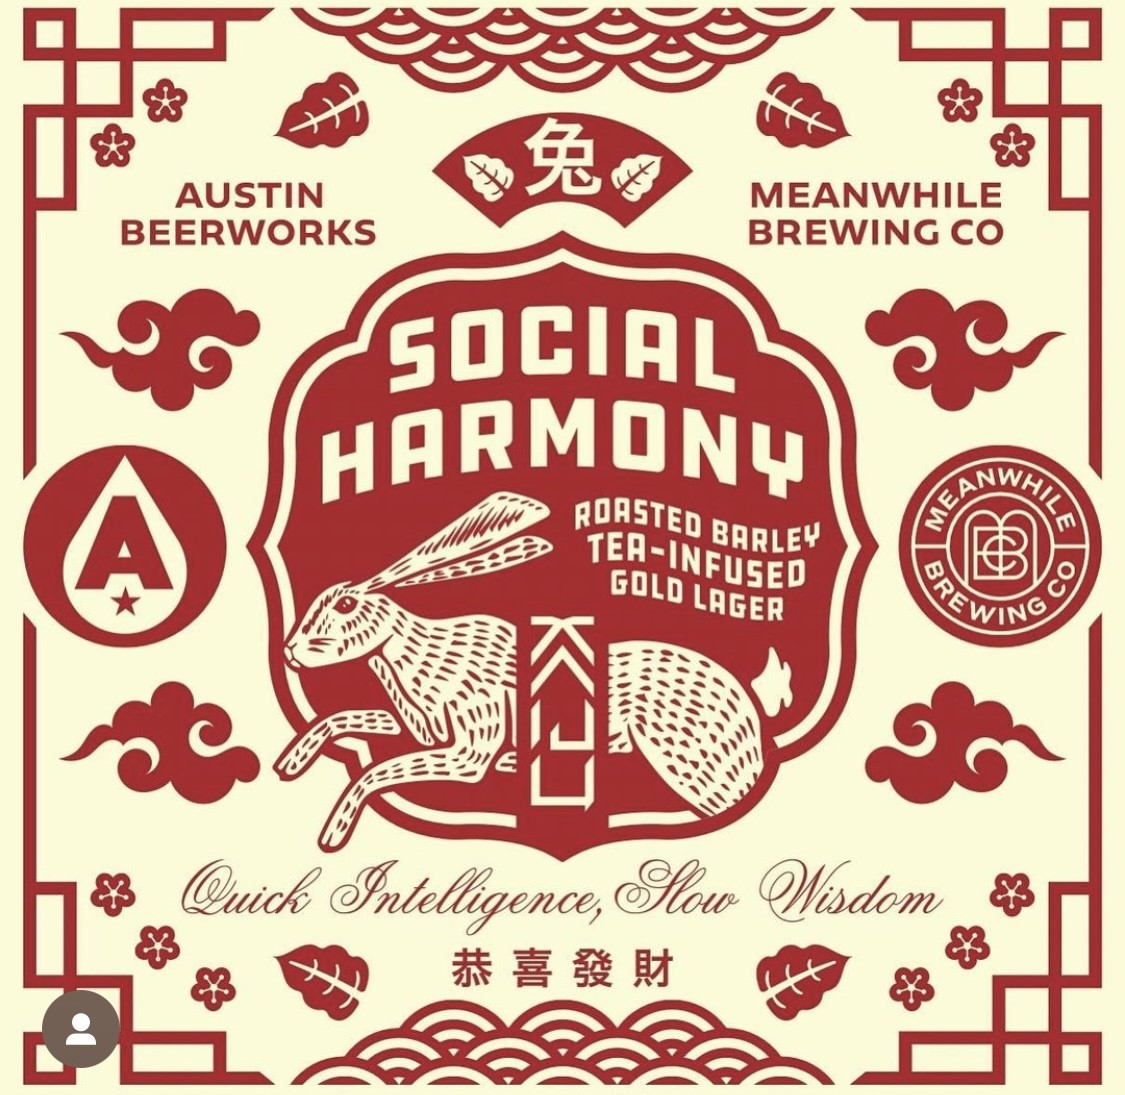 Social Harmony: A Kaiju Brew, credit Austin Beerworks